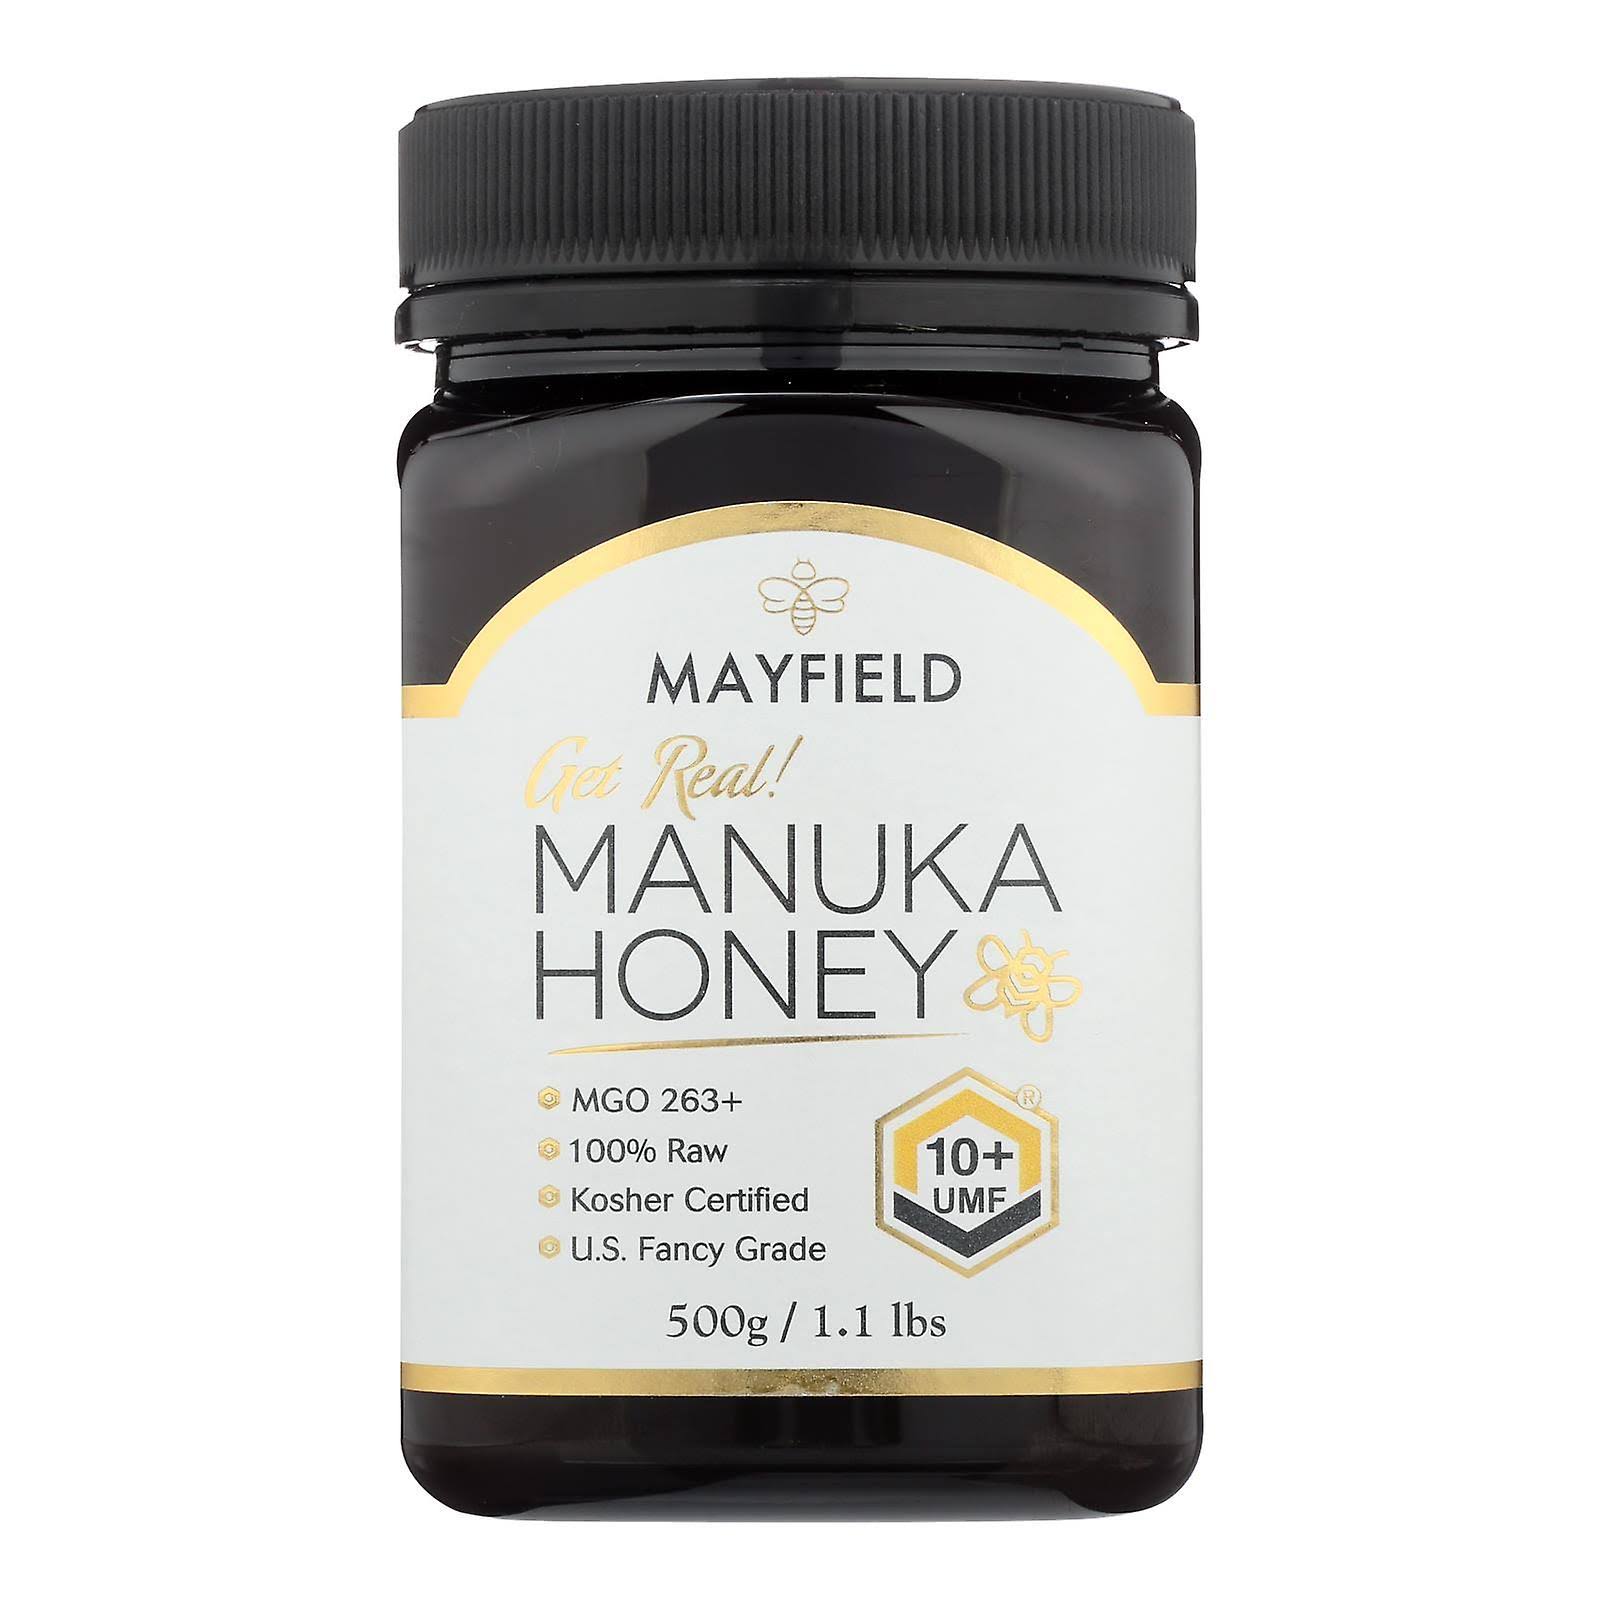 Pacific Resources International Manuka Honey - 17.6oz